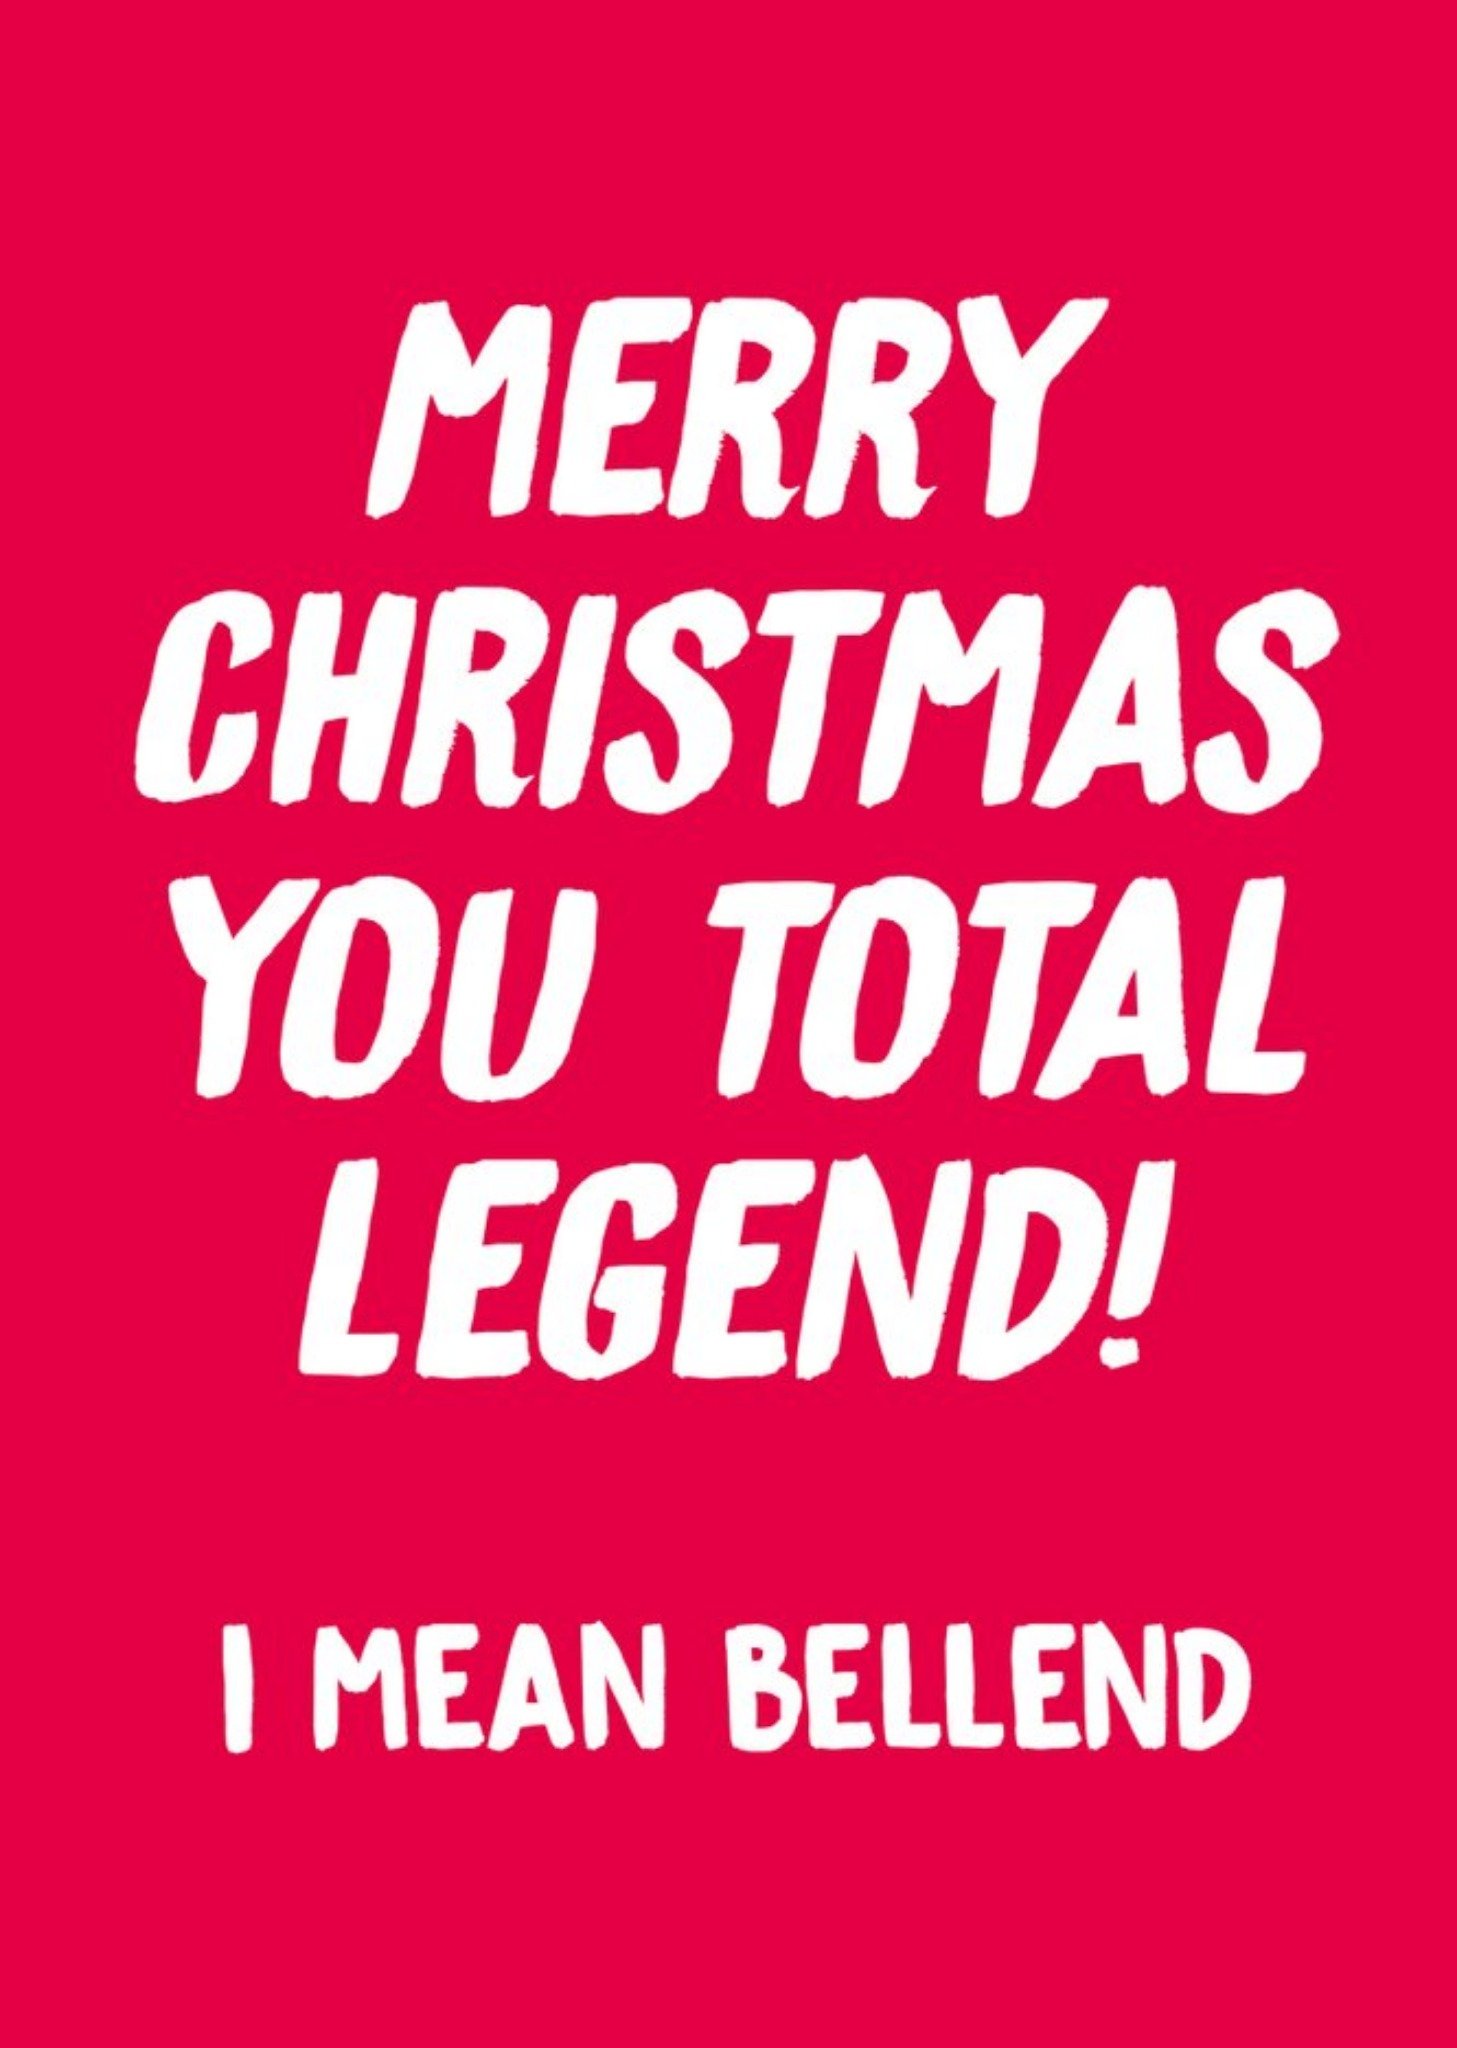 Moonpig Dean Morris Merry Christmas You Total Legend Christmas Card, Large